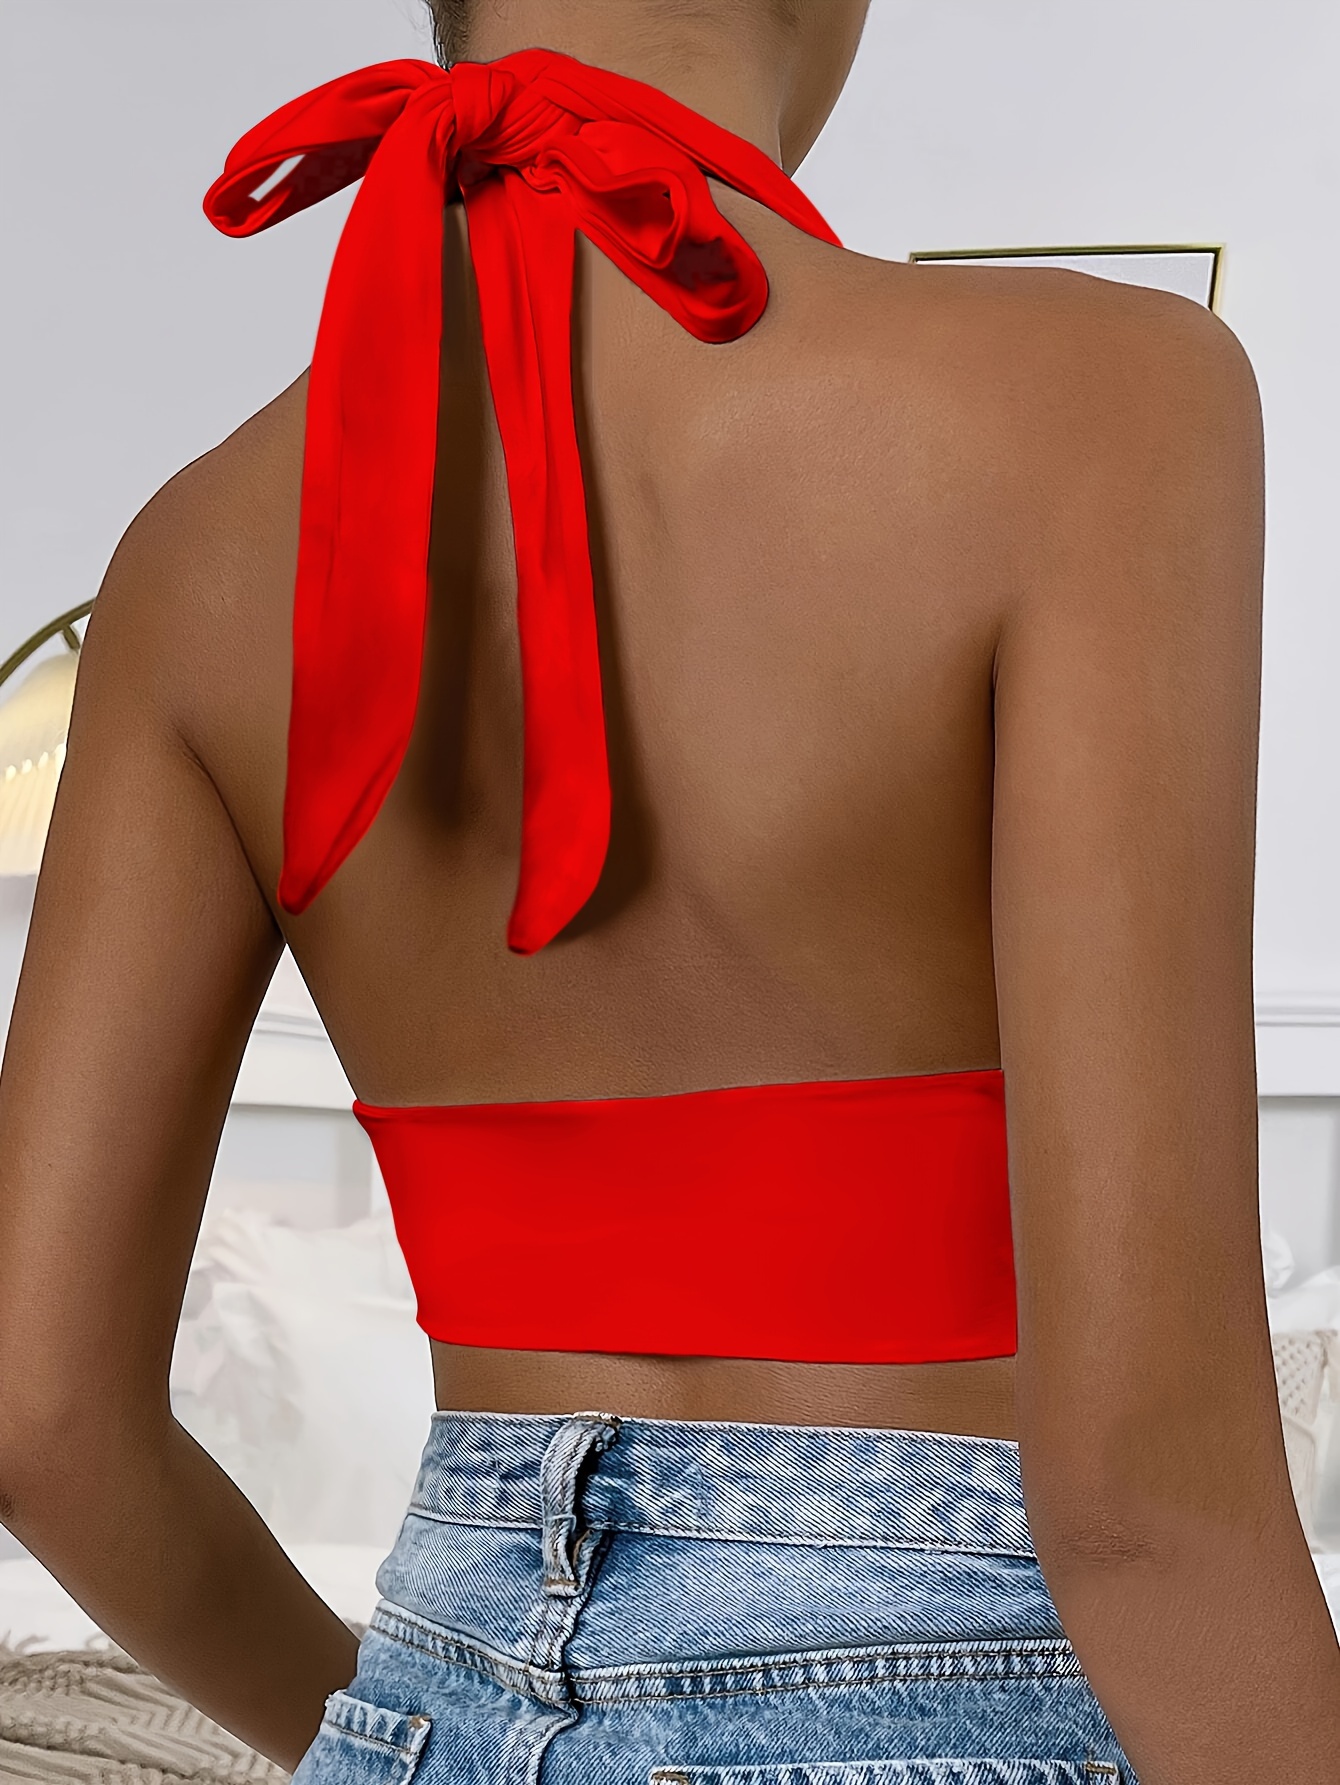 Aayomet Womens Tops Women's Deep V Neck Halter Tie Back Sleeveless Backless  Cami Crop Top,Rose Gold S 